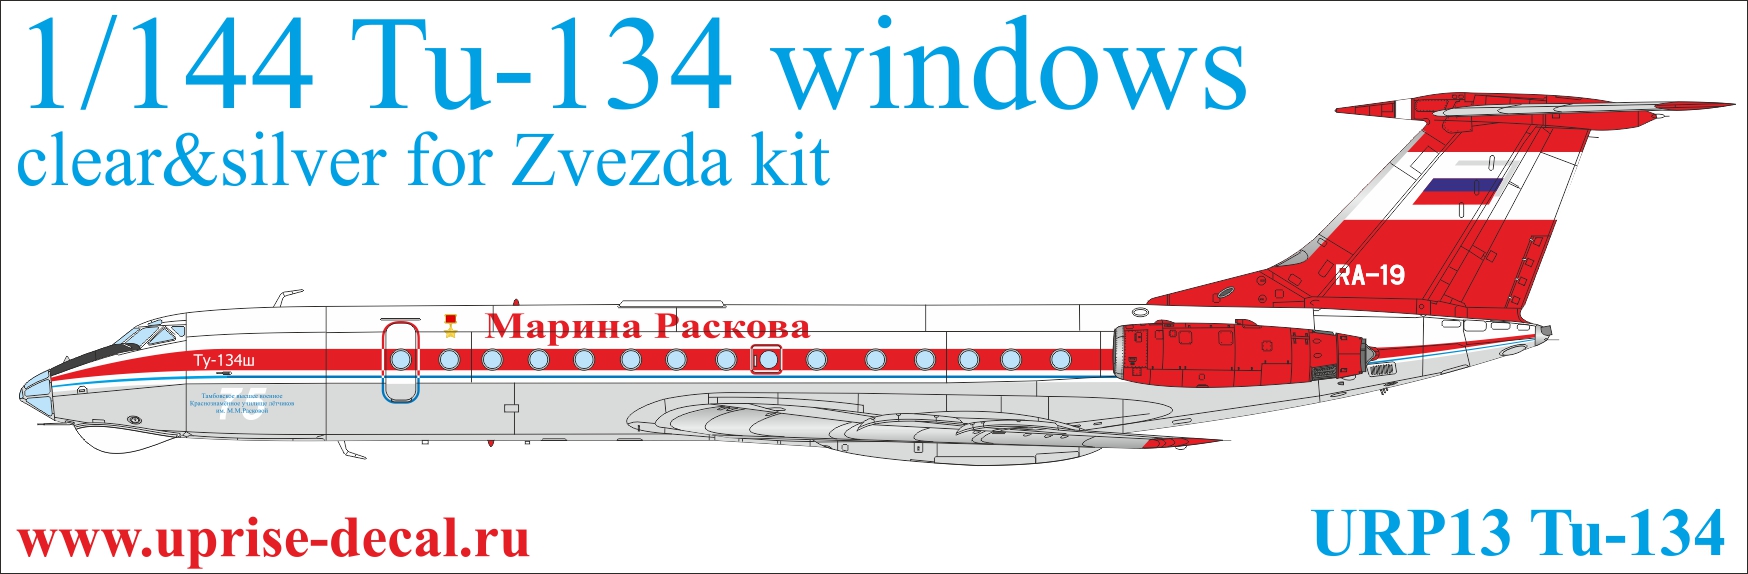 URP13  декали  Tupolev Tu-134 for Zvezda kit (clear)  (1:144)